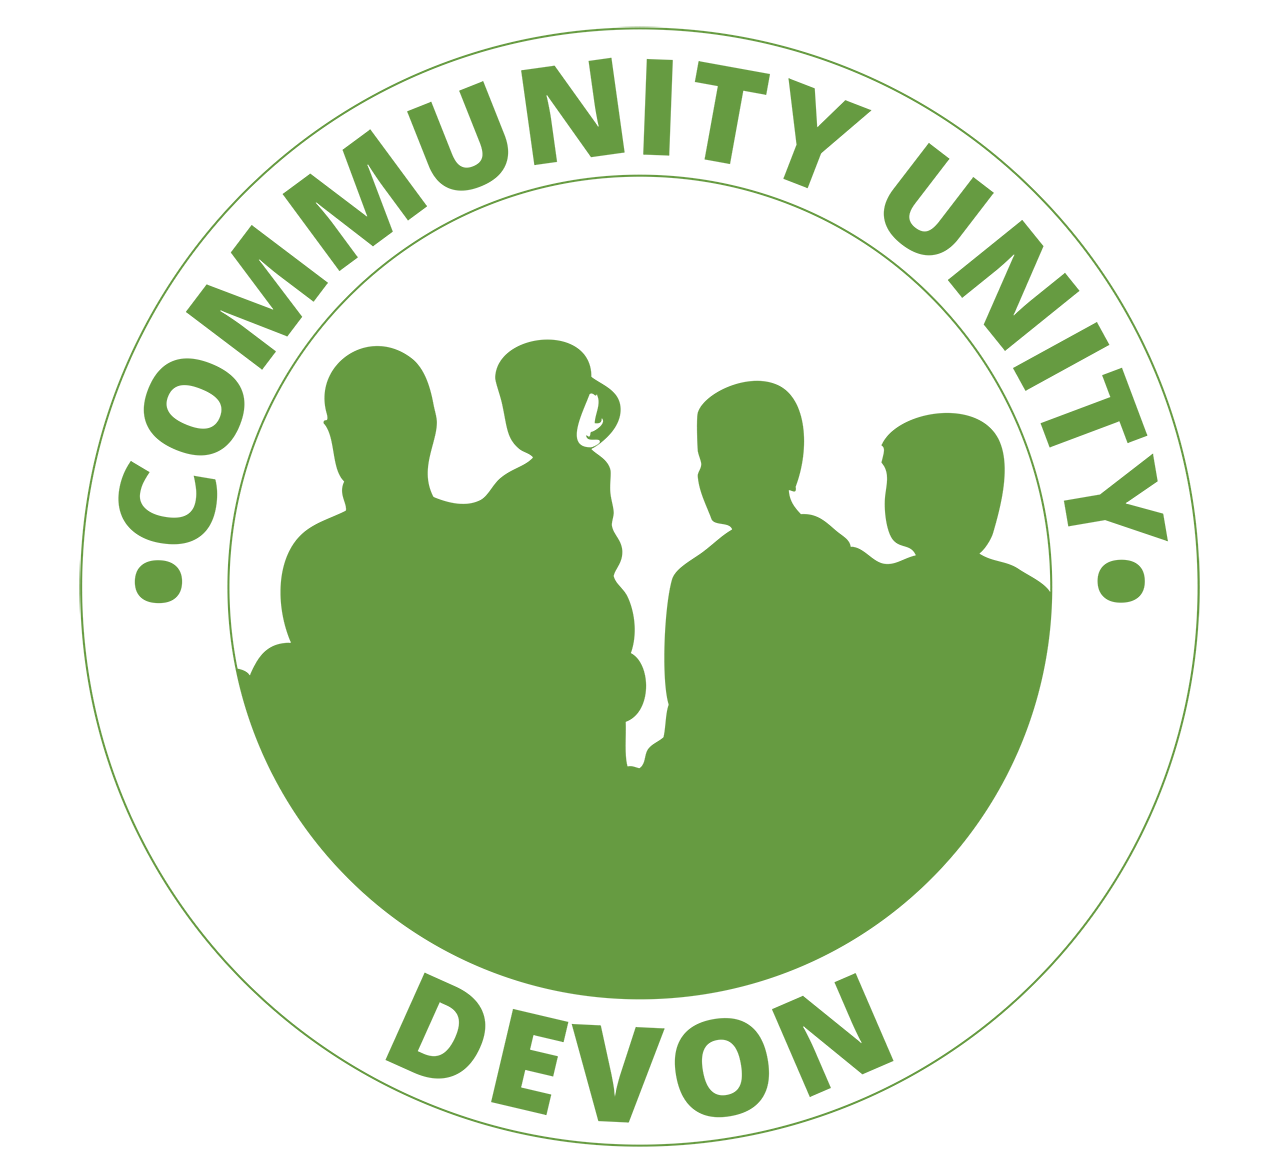 Community Unity